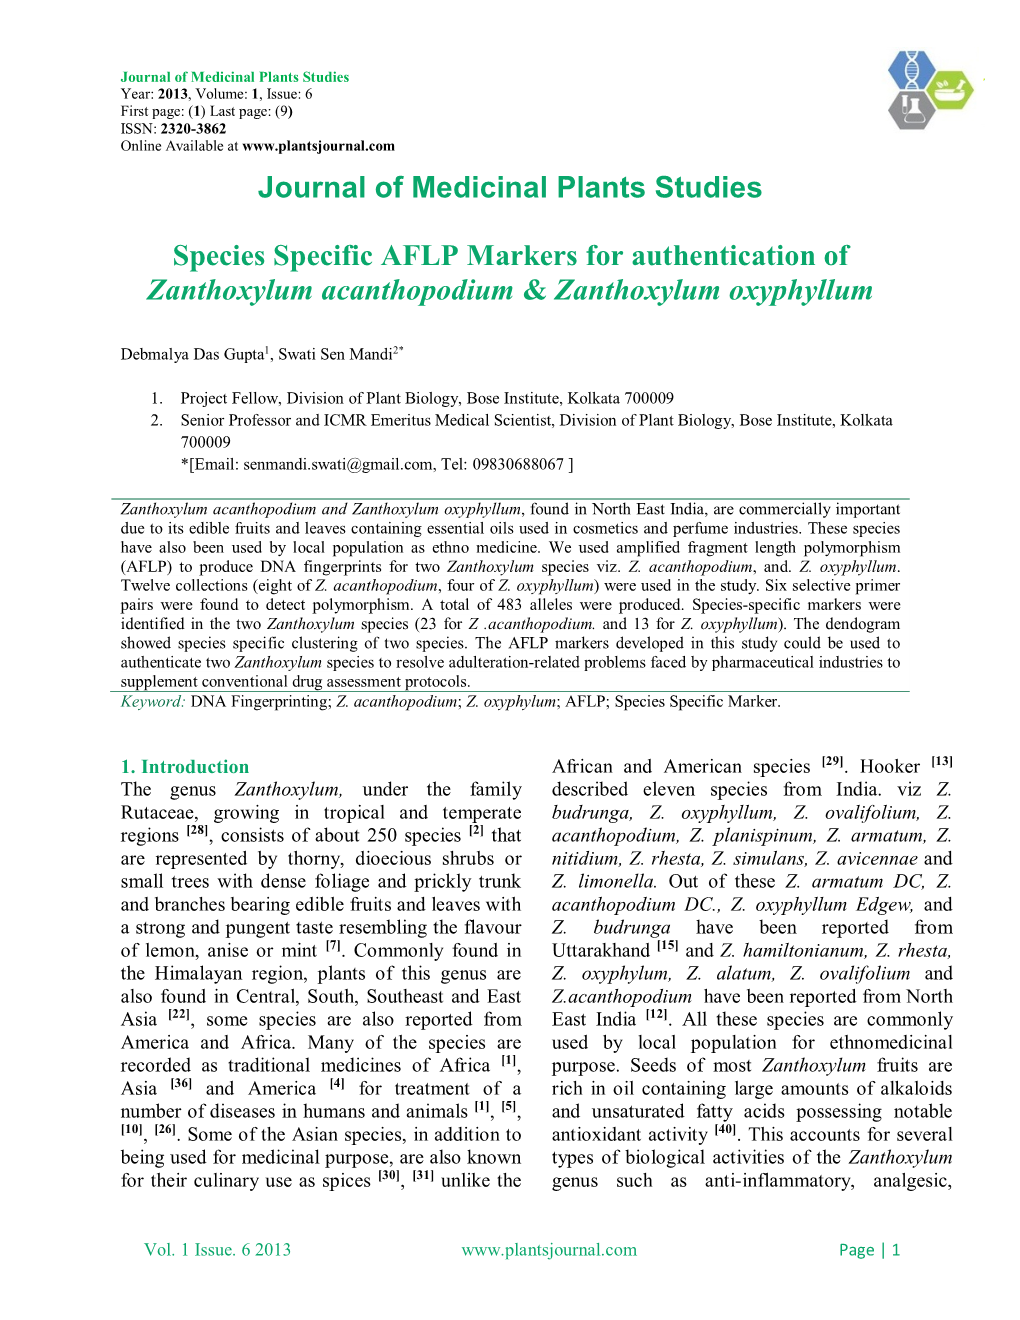 Journal of Medicinal Plants Studies Species Specific AFLP Markers For